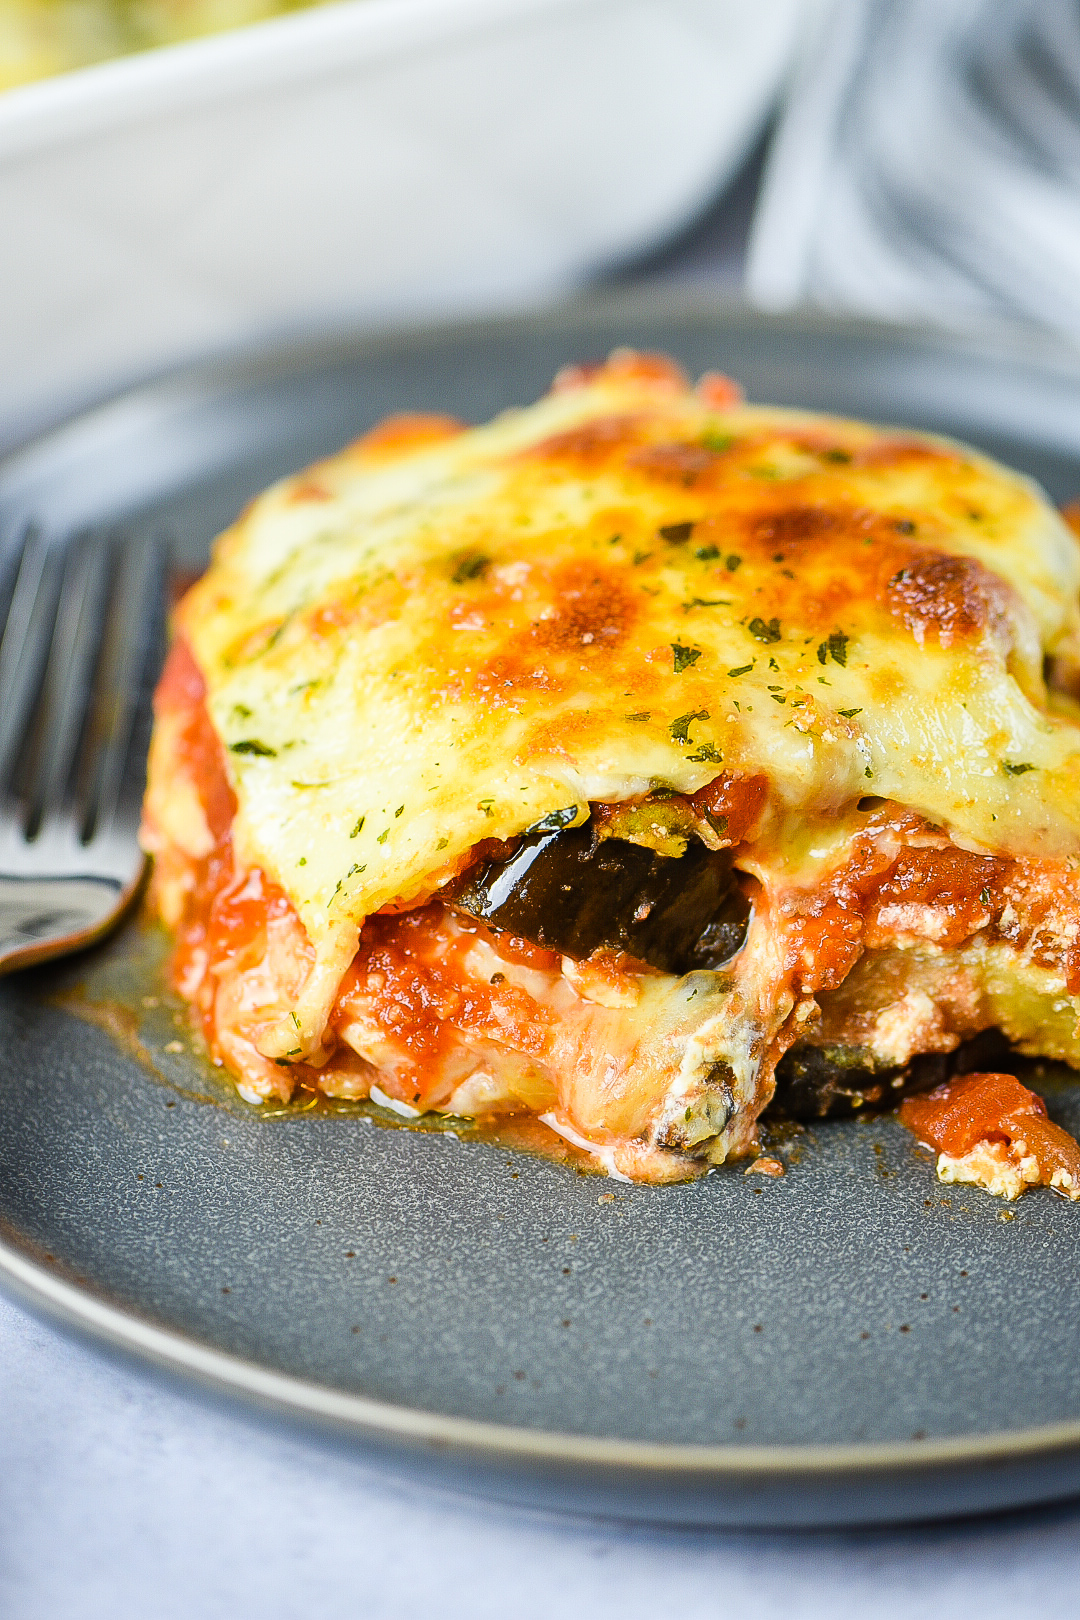 Vegetarian Eggplant Lasagna | Dude That Cookz